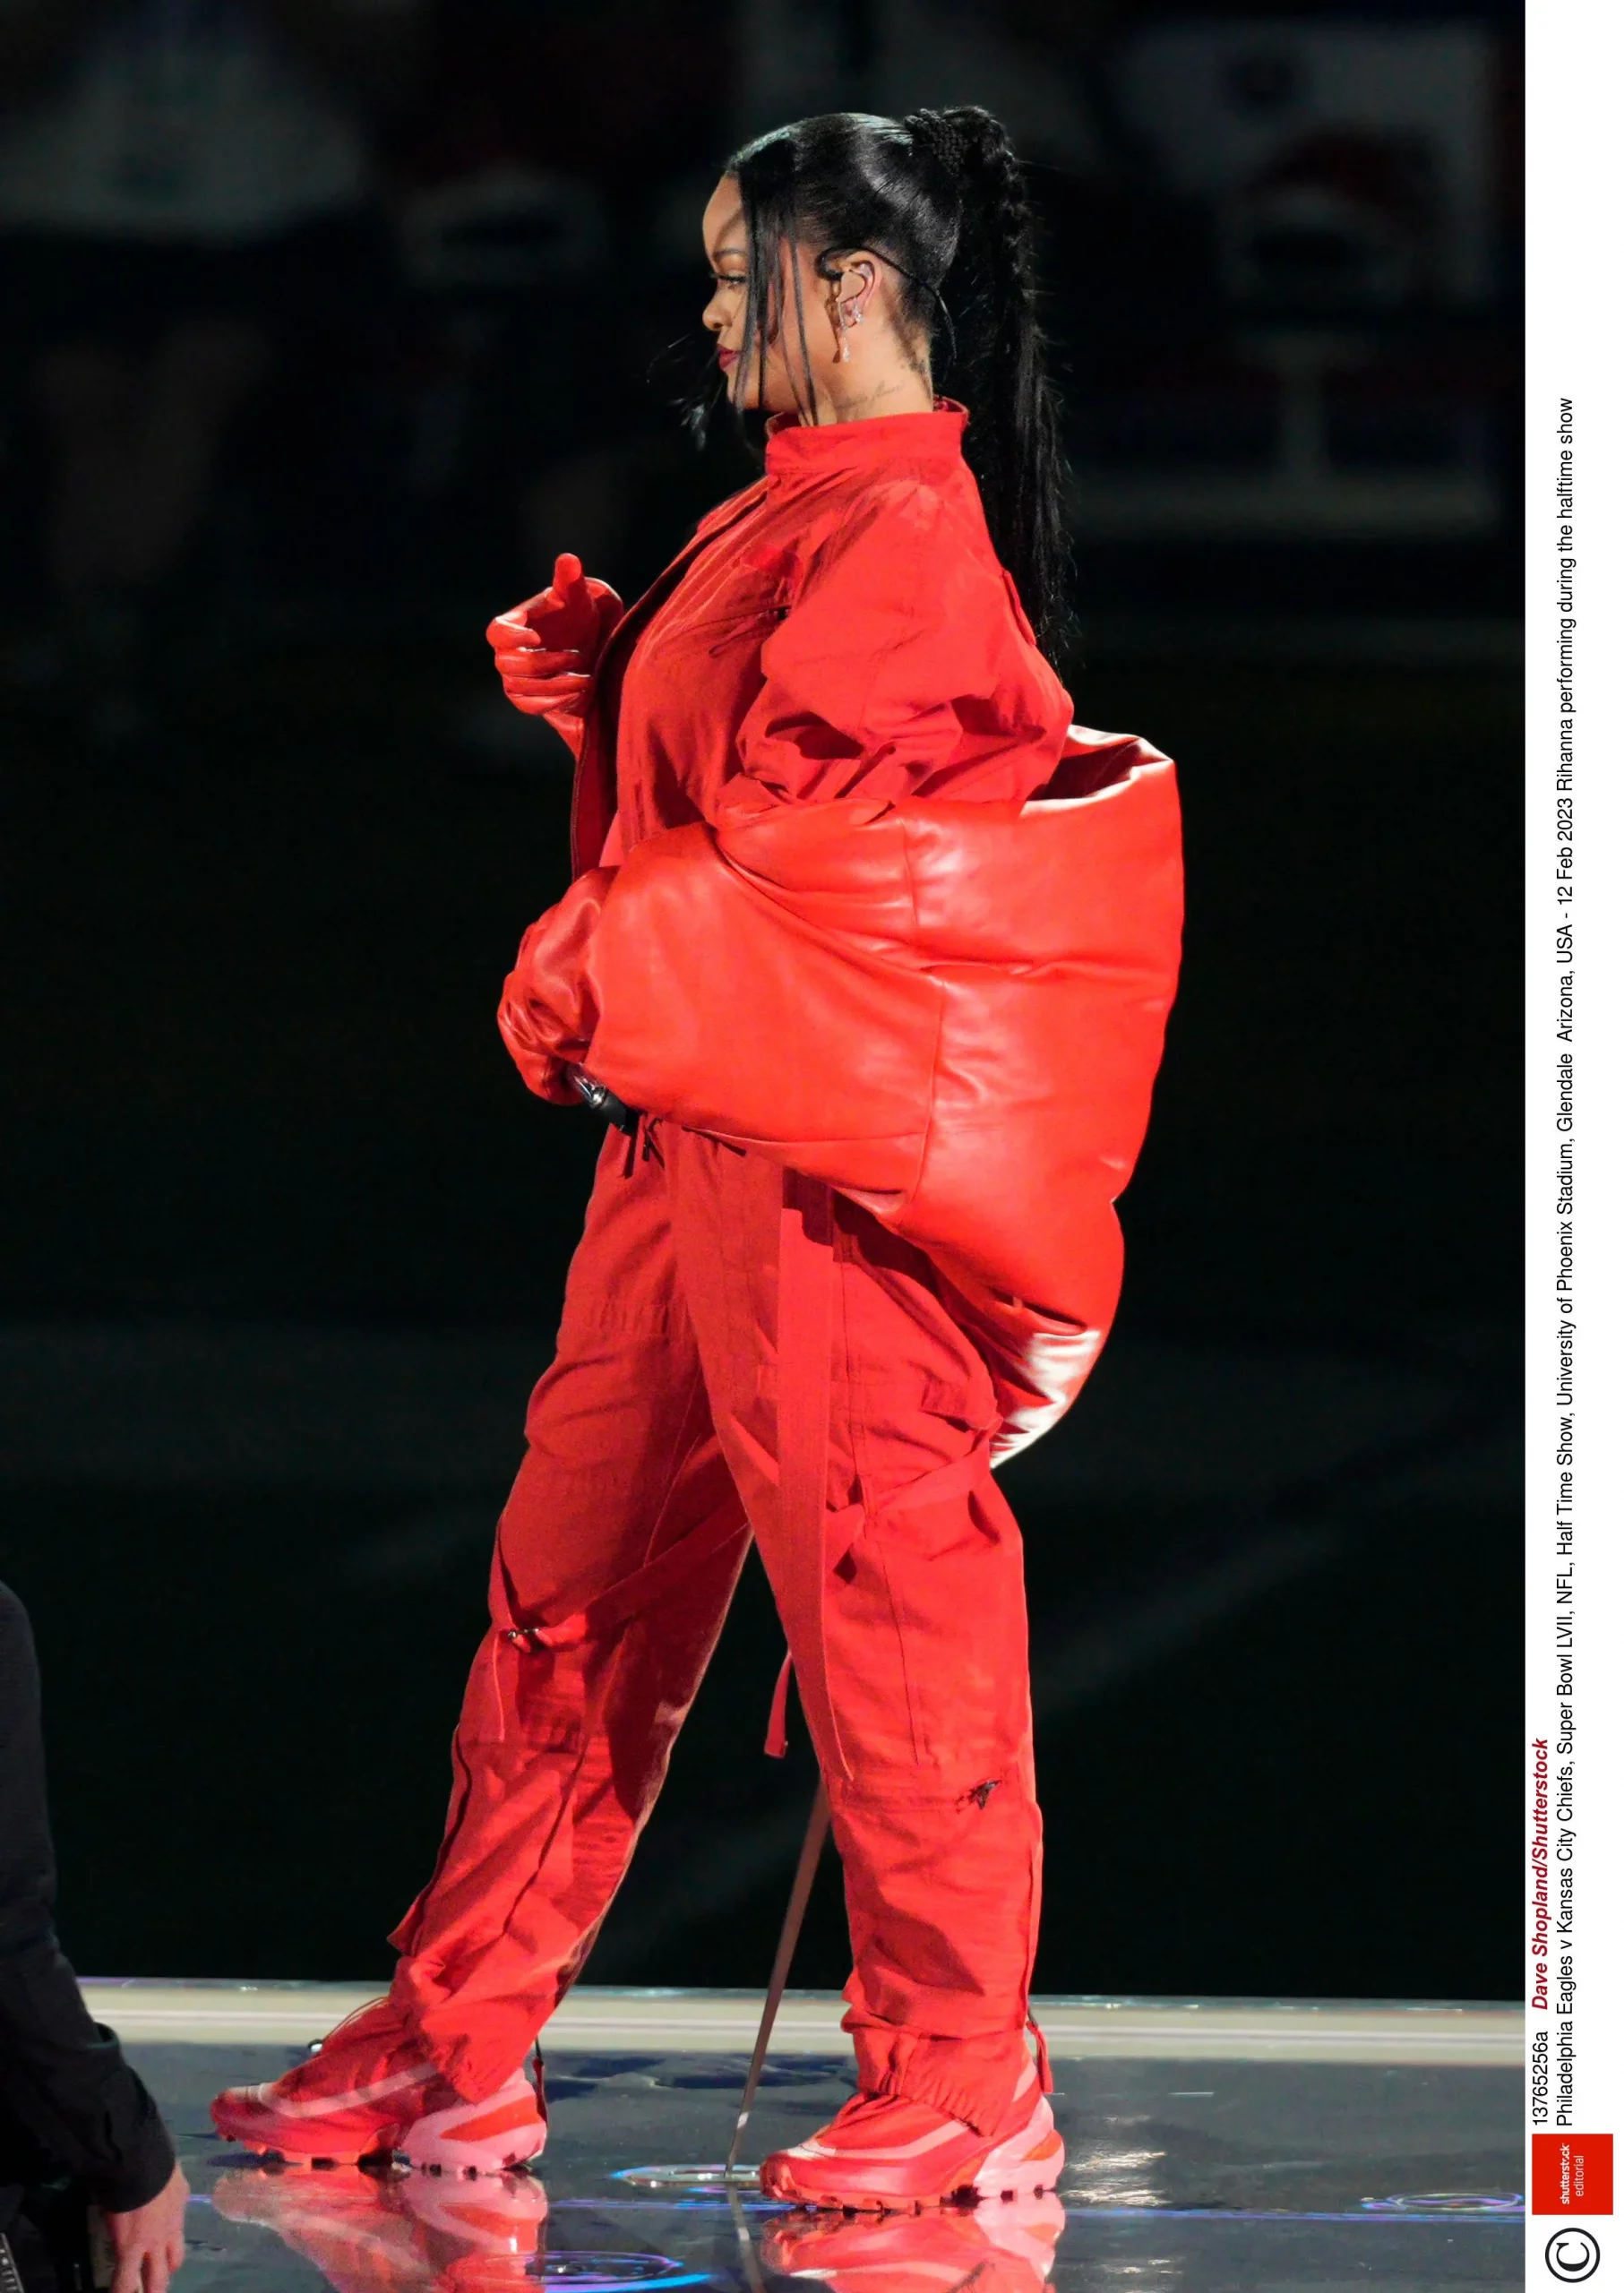 NFL half time performance – Rihanna debuts baby bump!